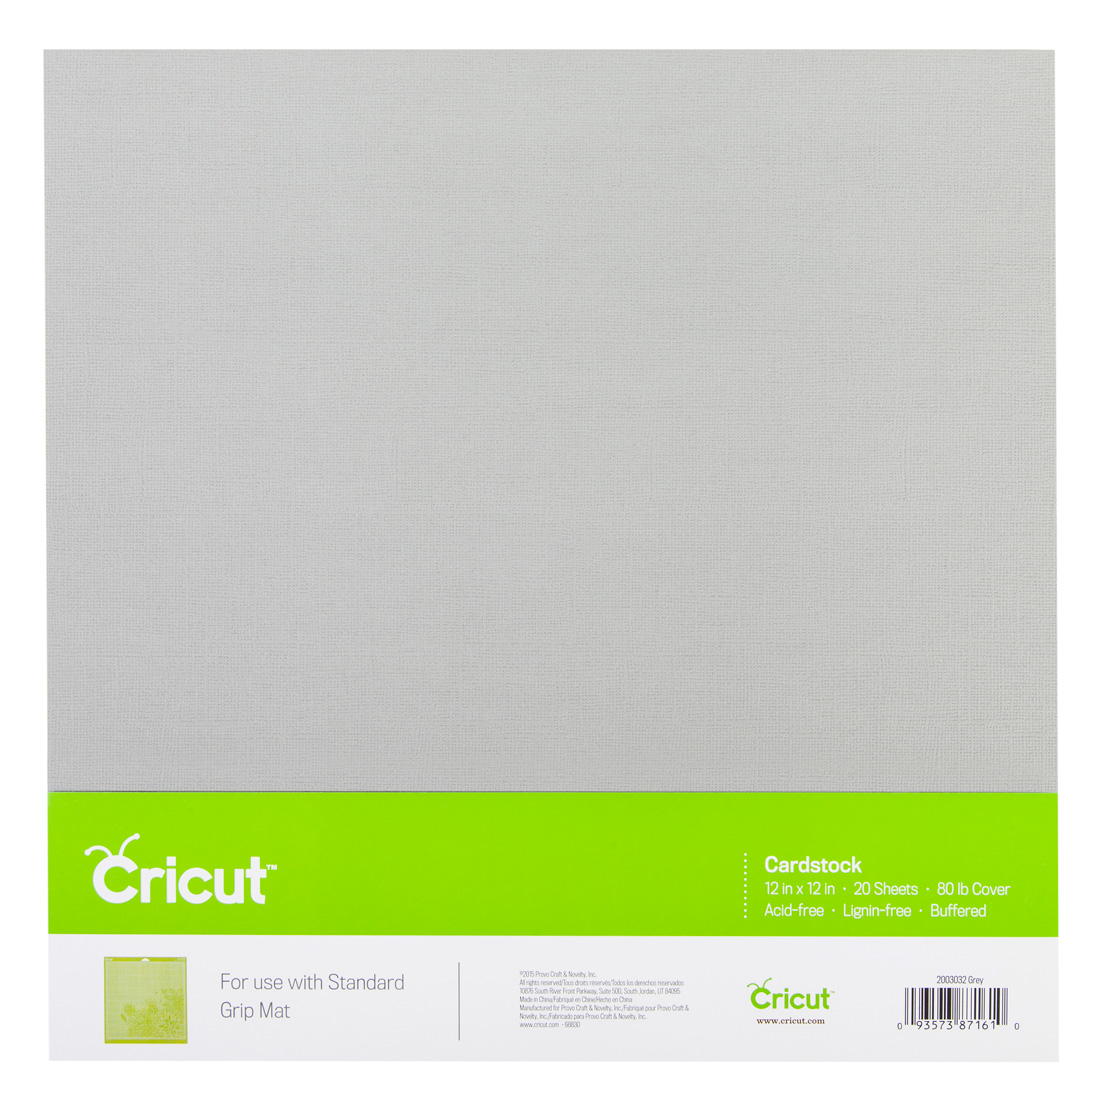 Cricut (Basics) Cardstock 12 x 12 24 sheets, 12x12